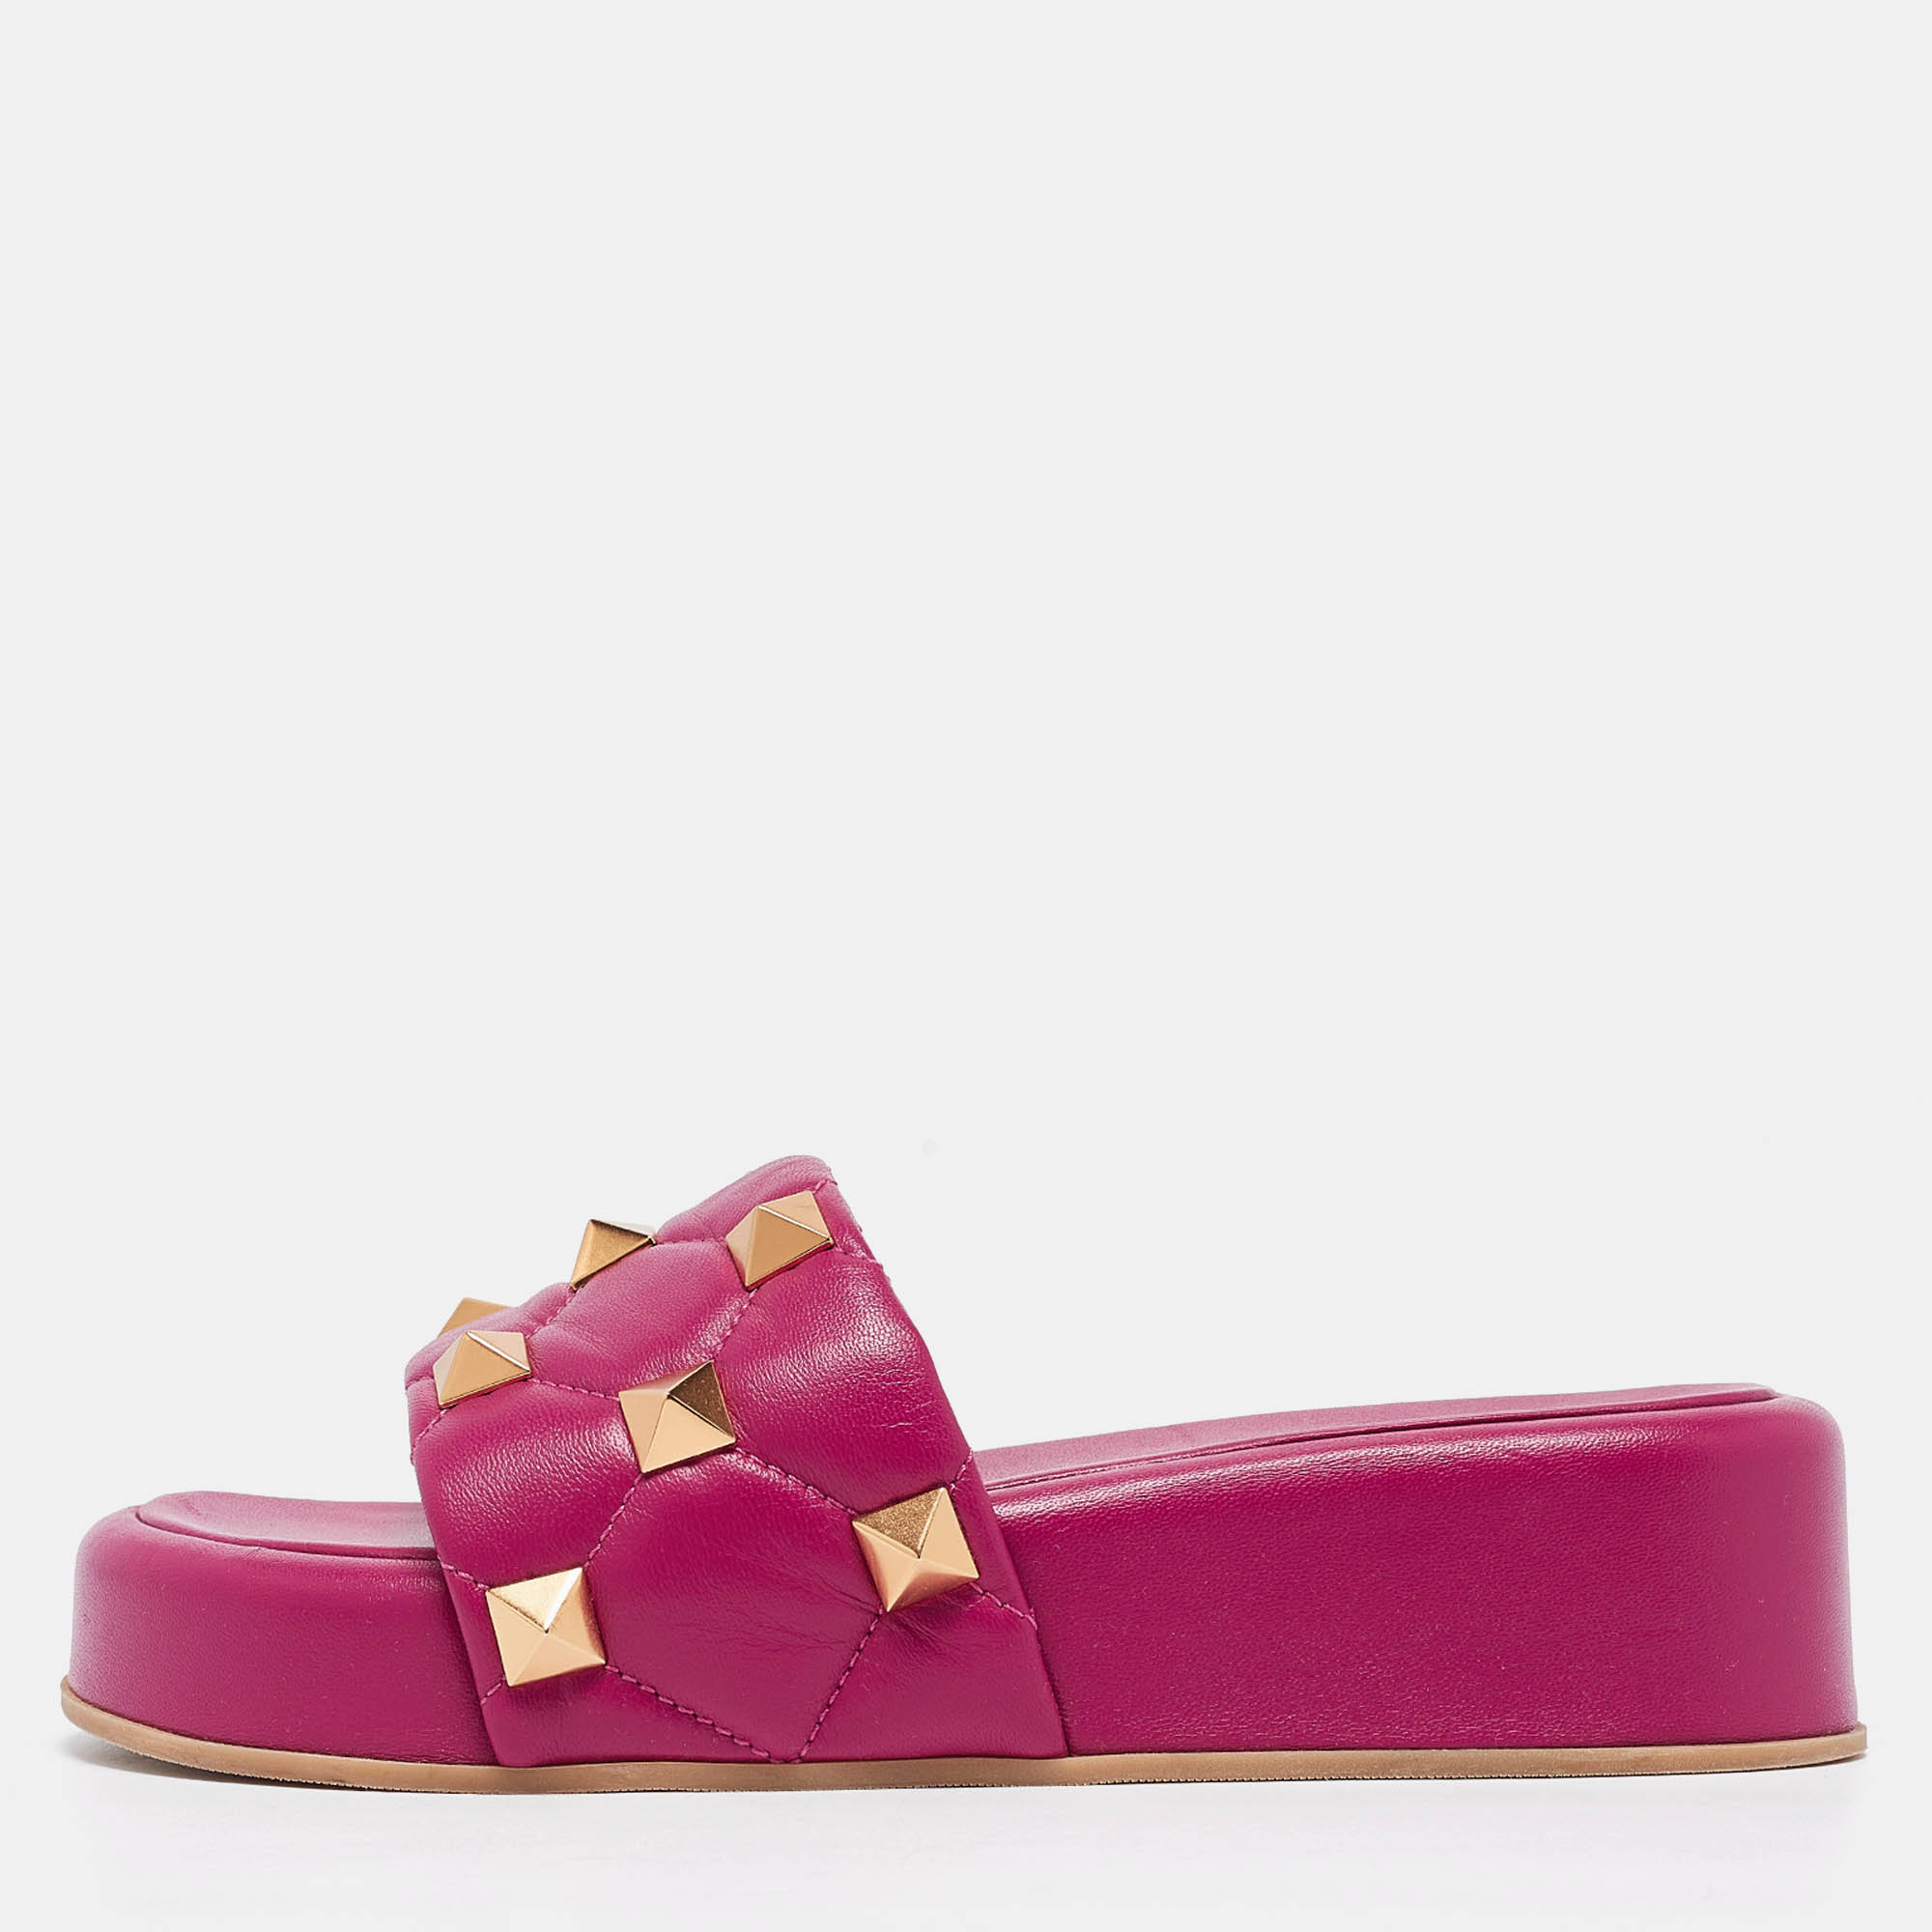 Valentino purple leather studs slide sandals size 40